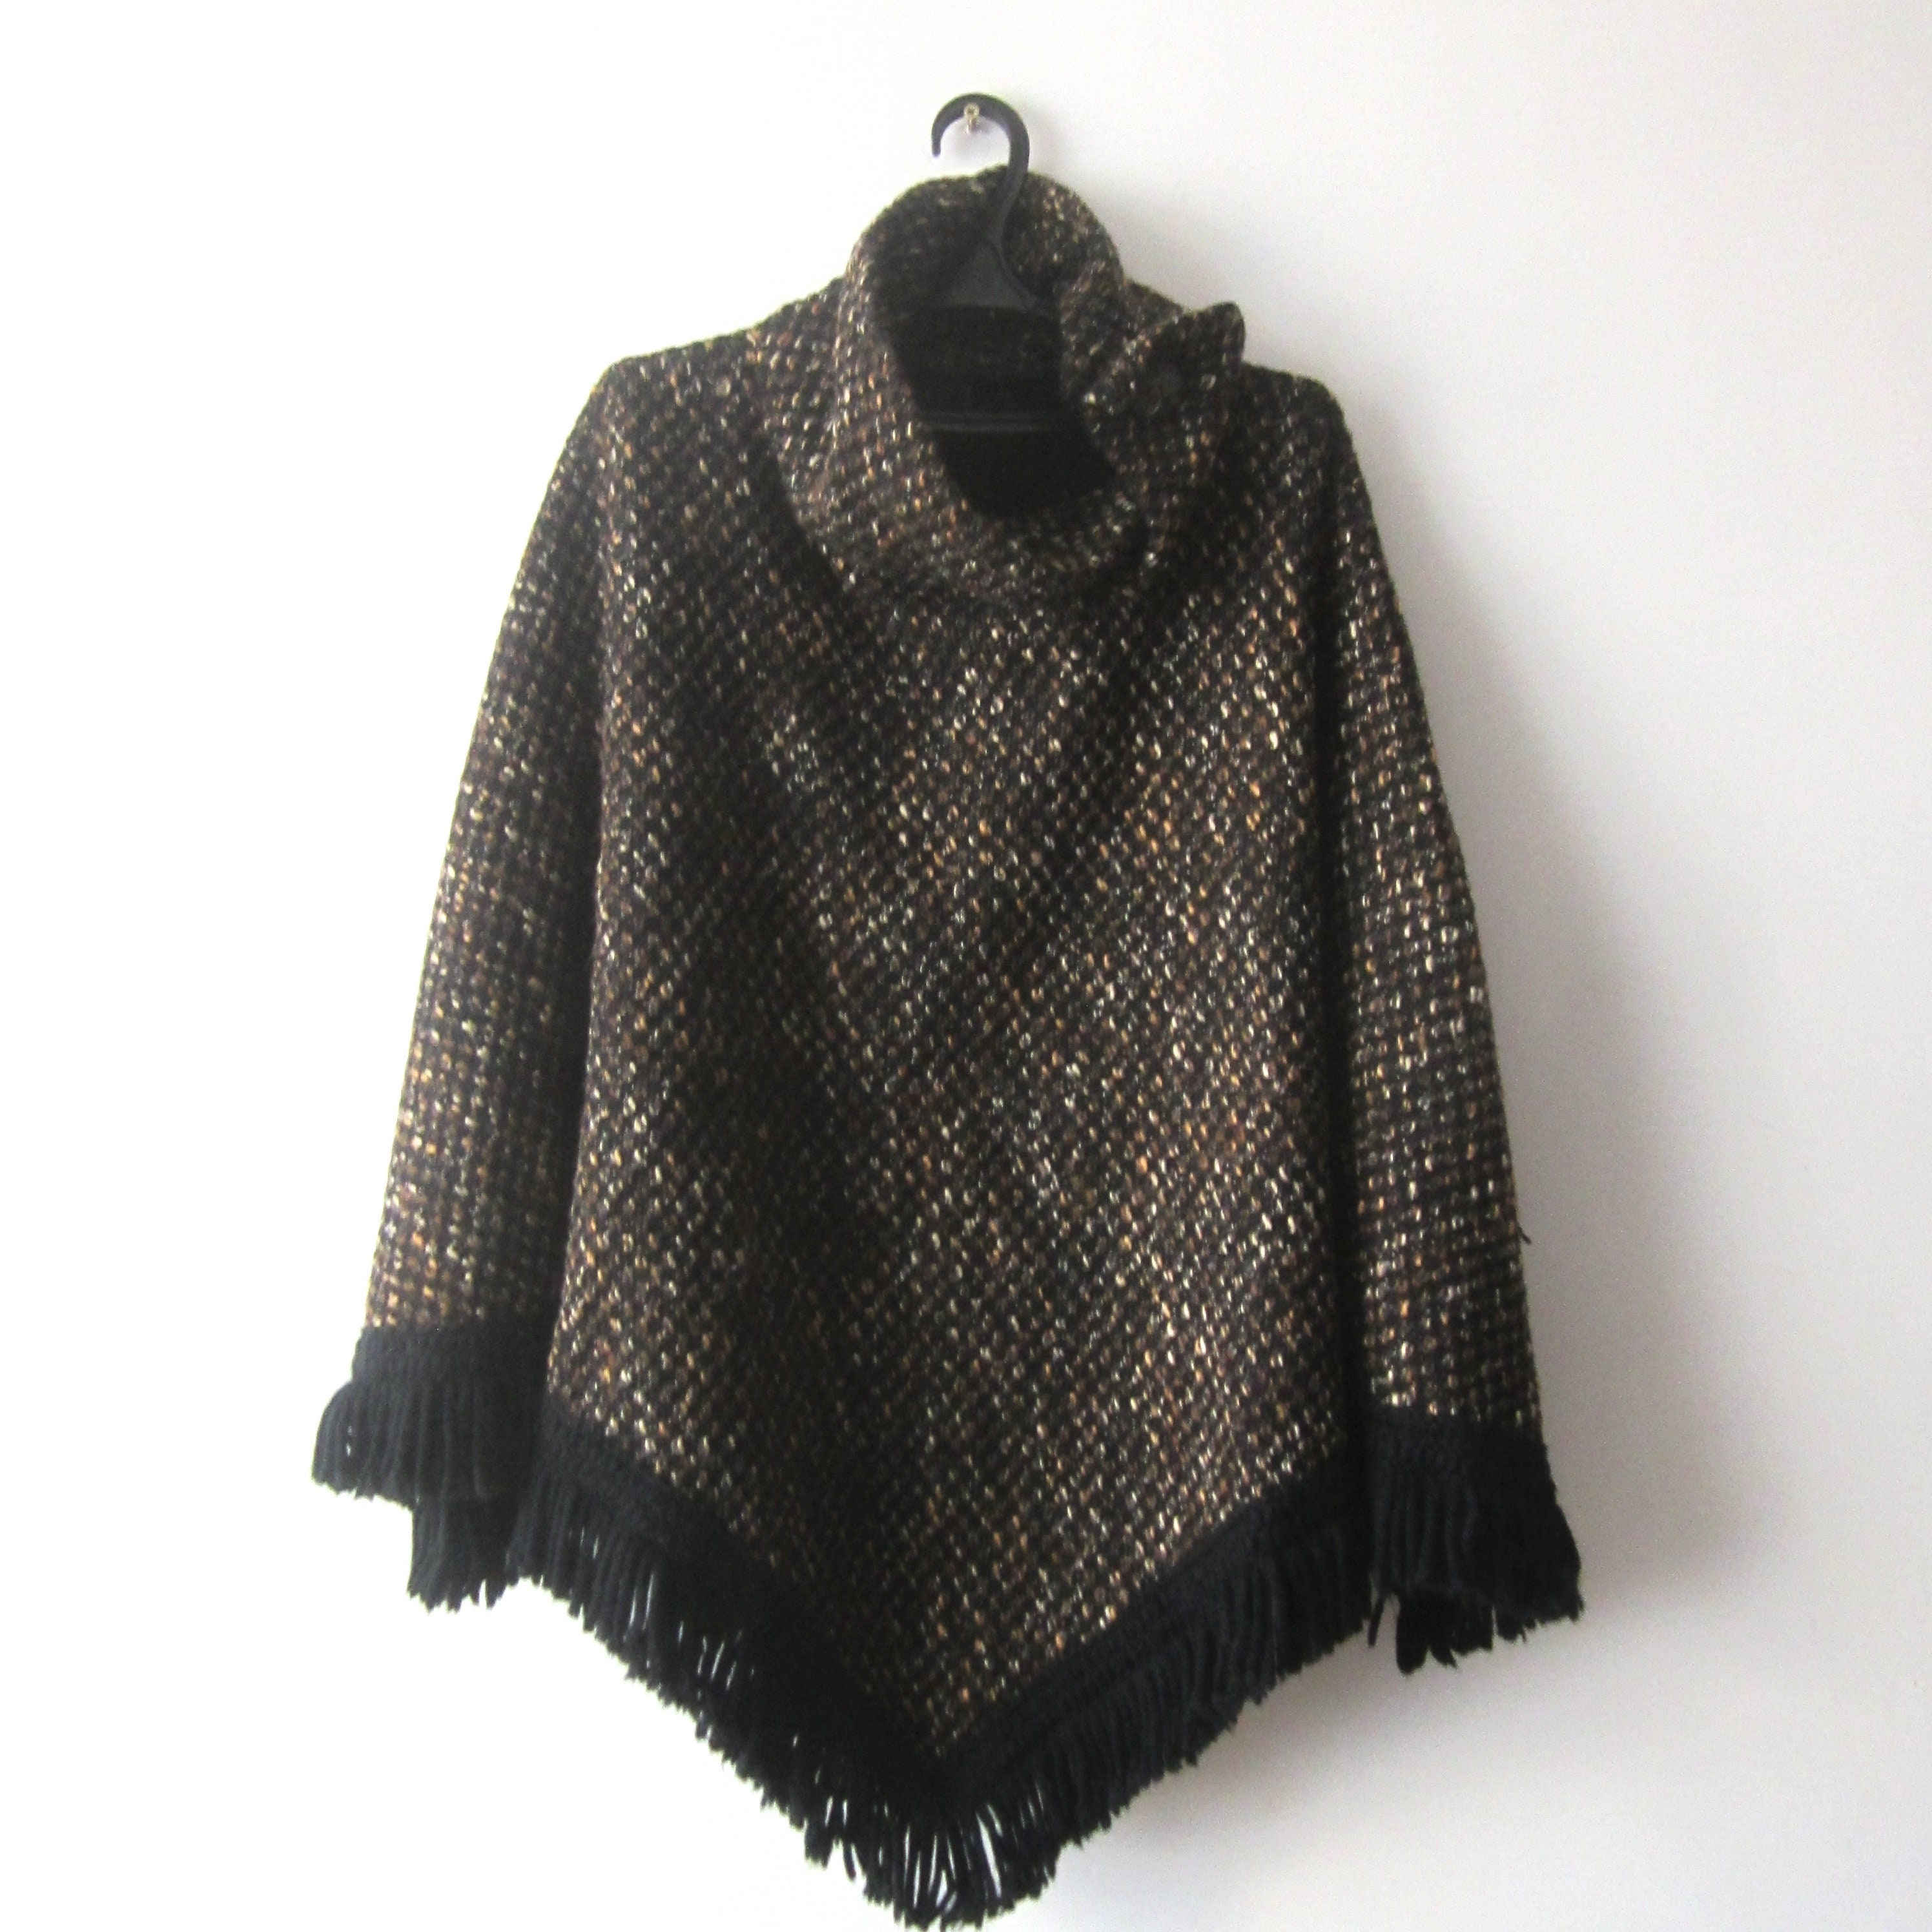 Vintage Brown Patterned Wool Blend Cape Poncho Fringe Wrap Shawl Grandma Autumn Large Size Scarf